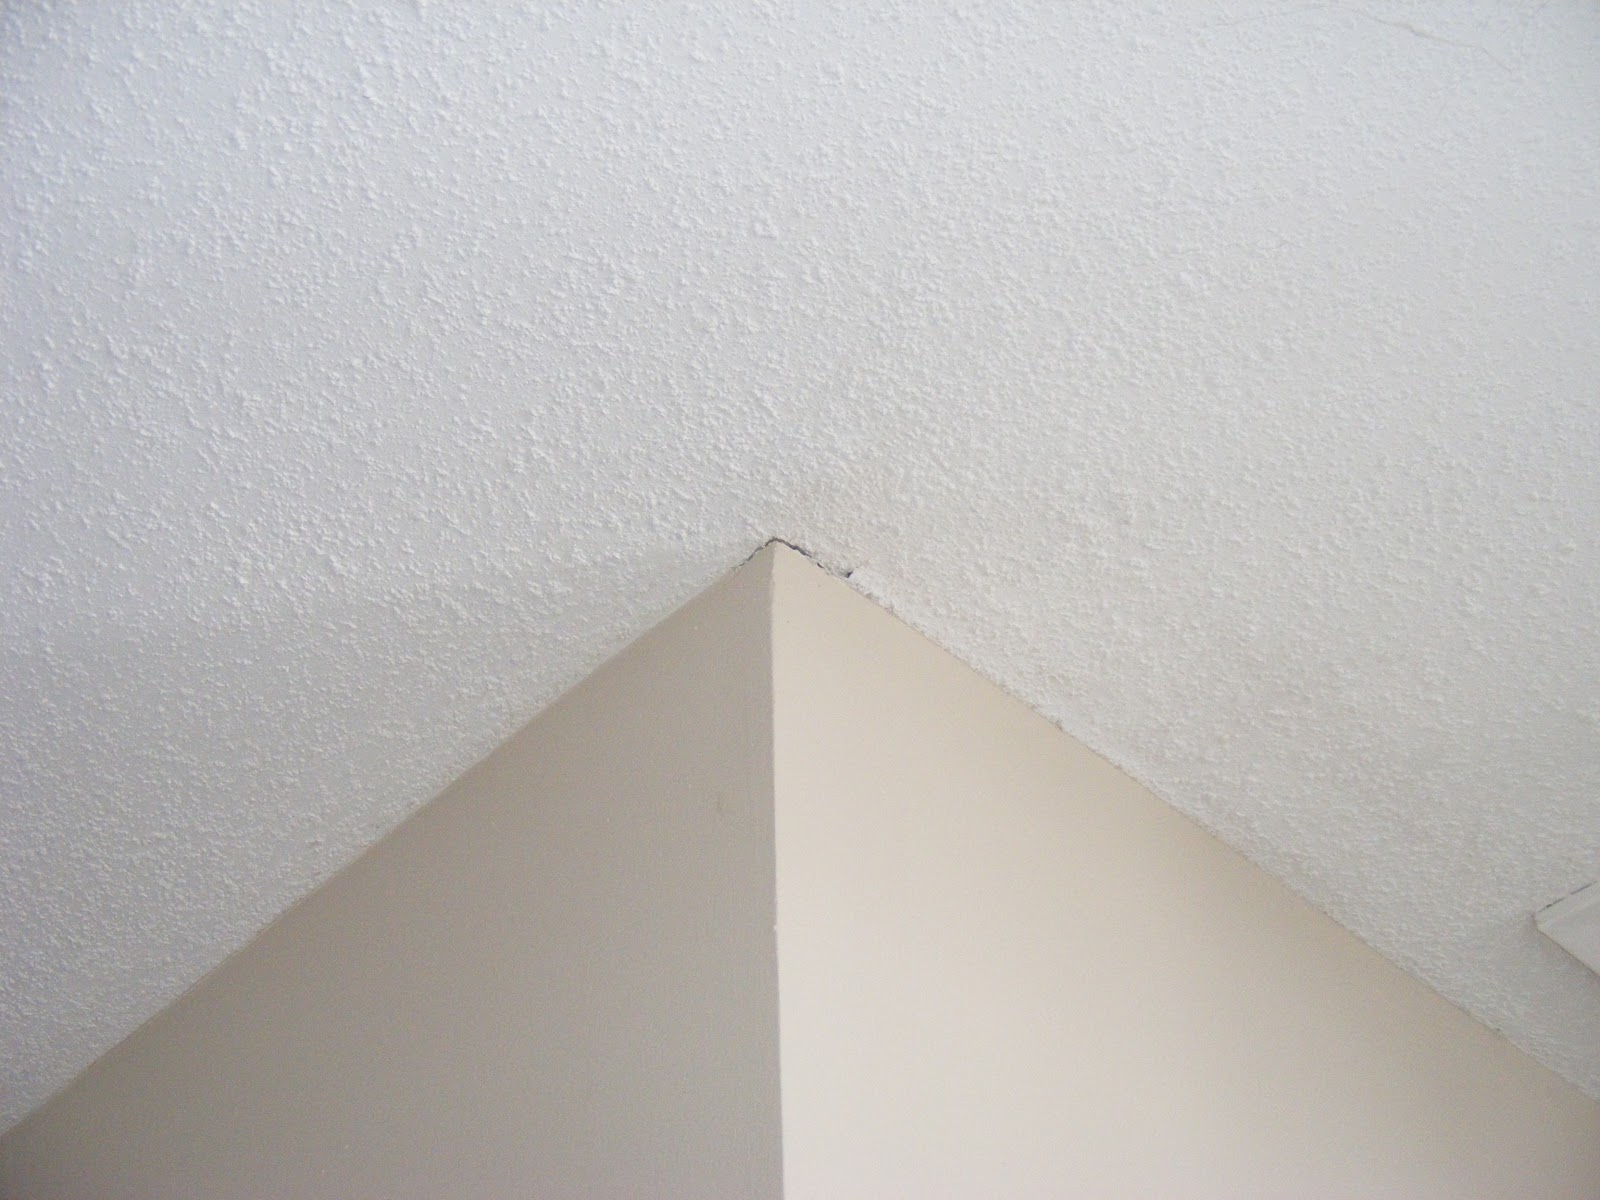 crack in ceiling plaster